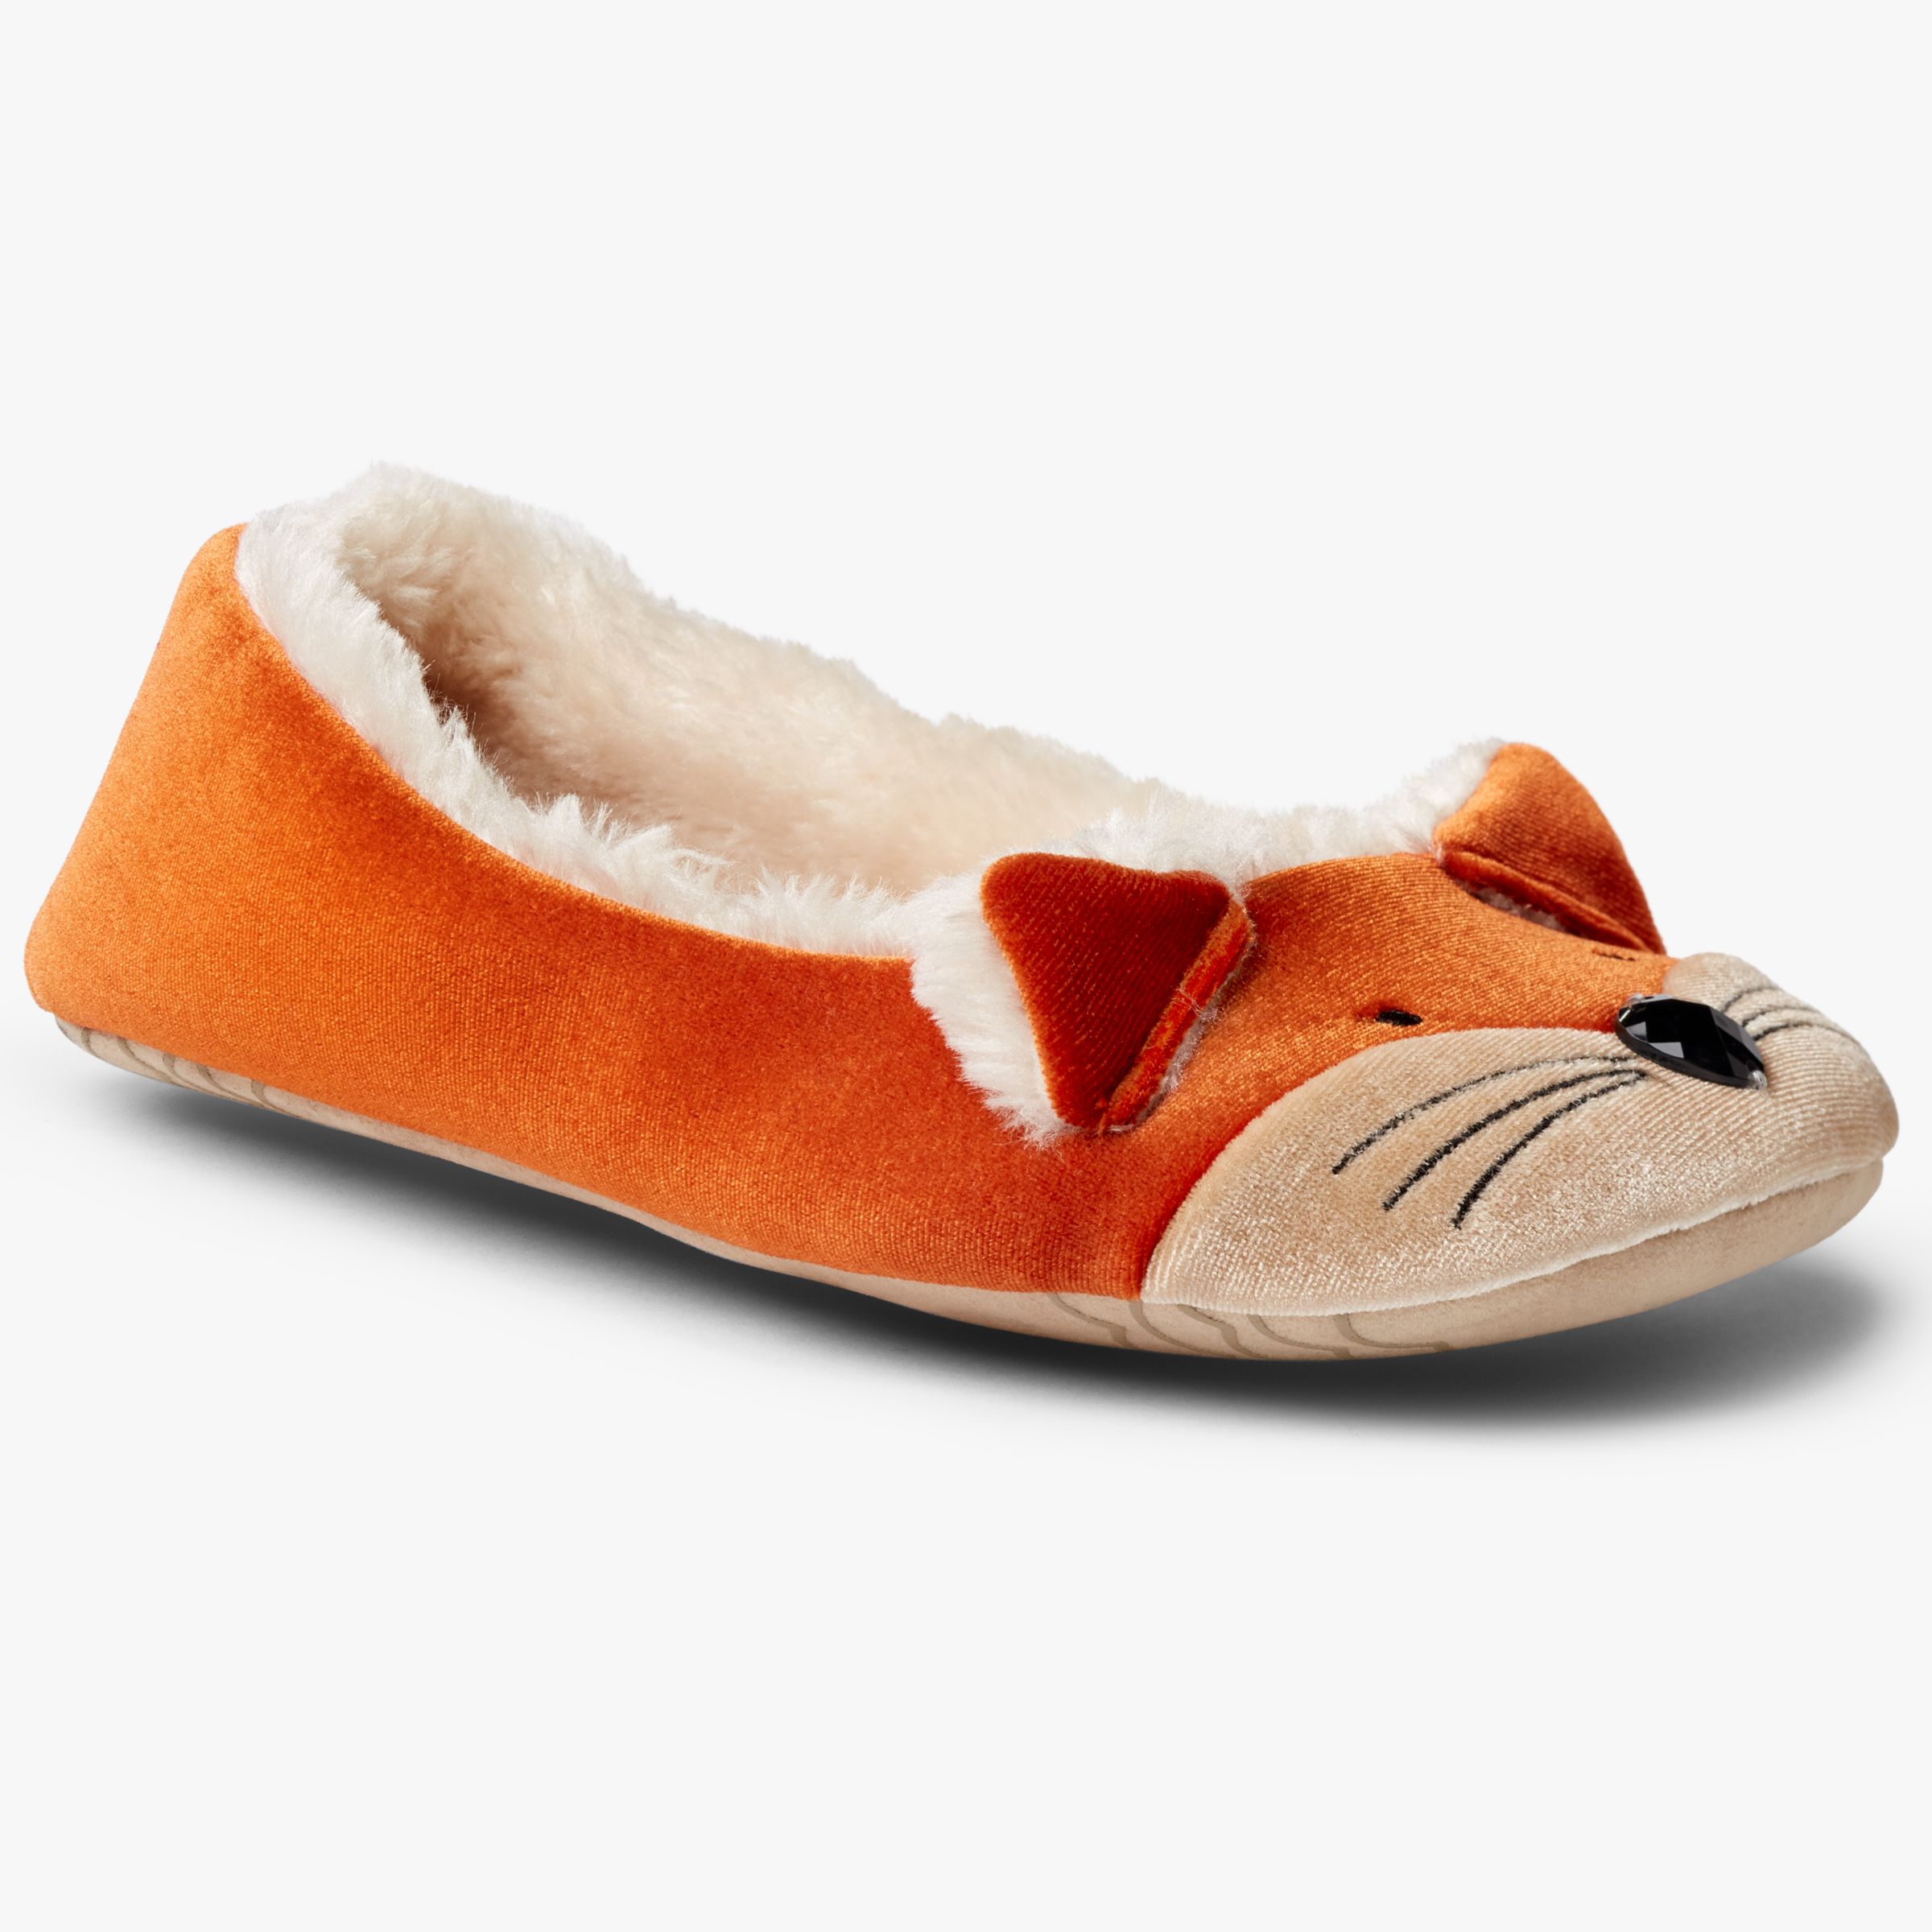 fox slippers